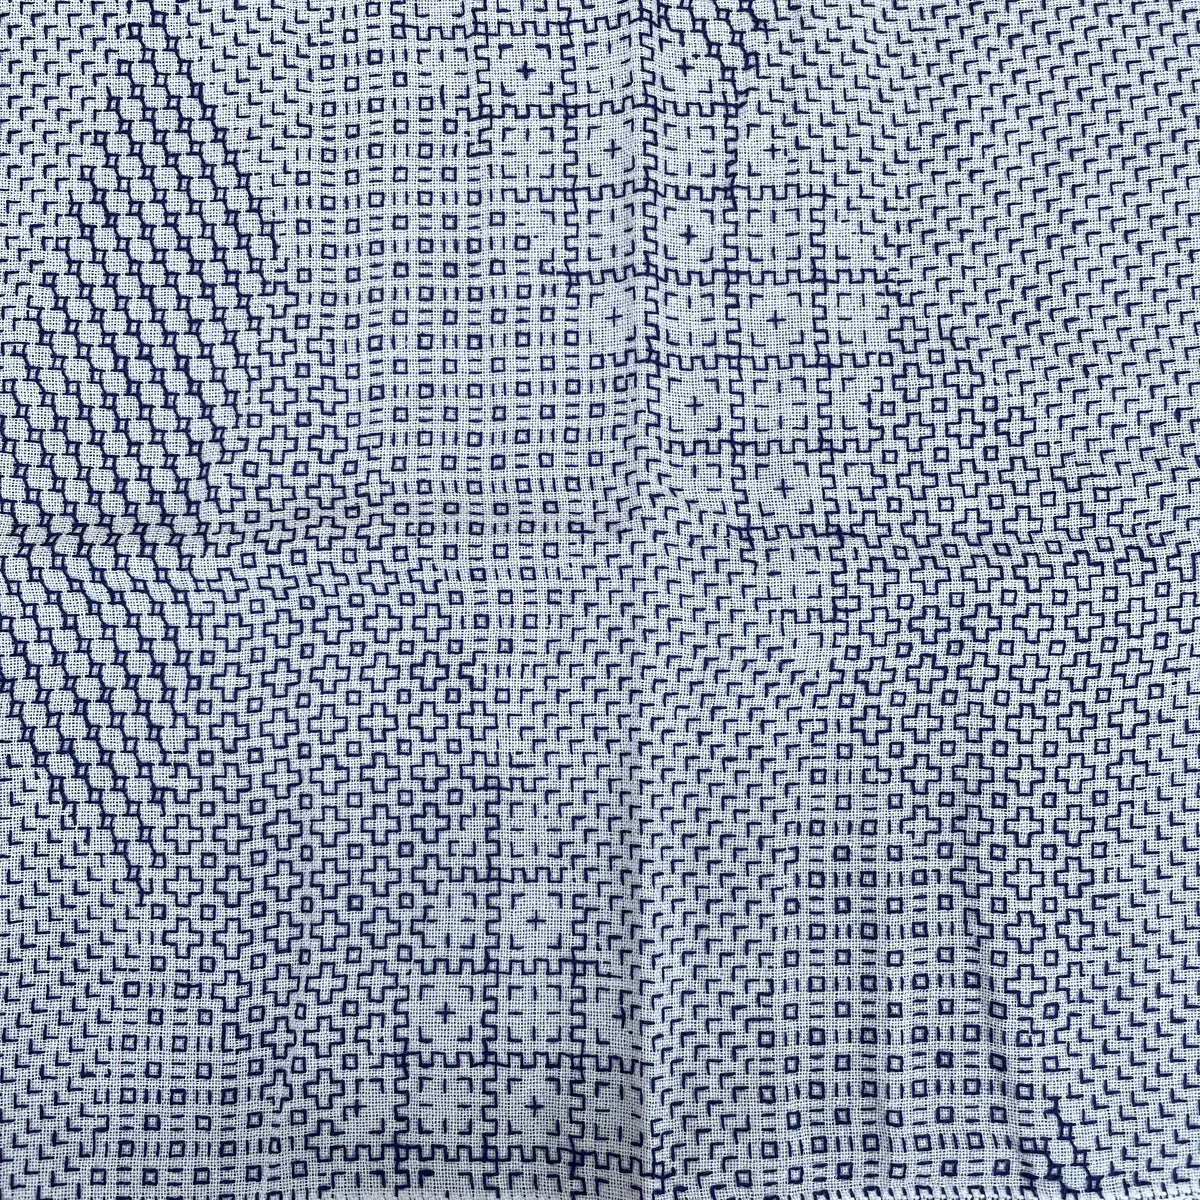 Sashiko White & Blue Cross Kitchen Towels, Set of 2 - Maple and Moon